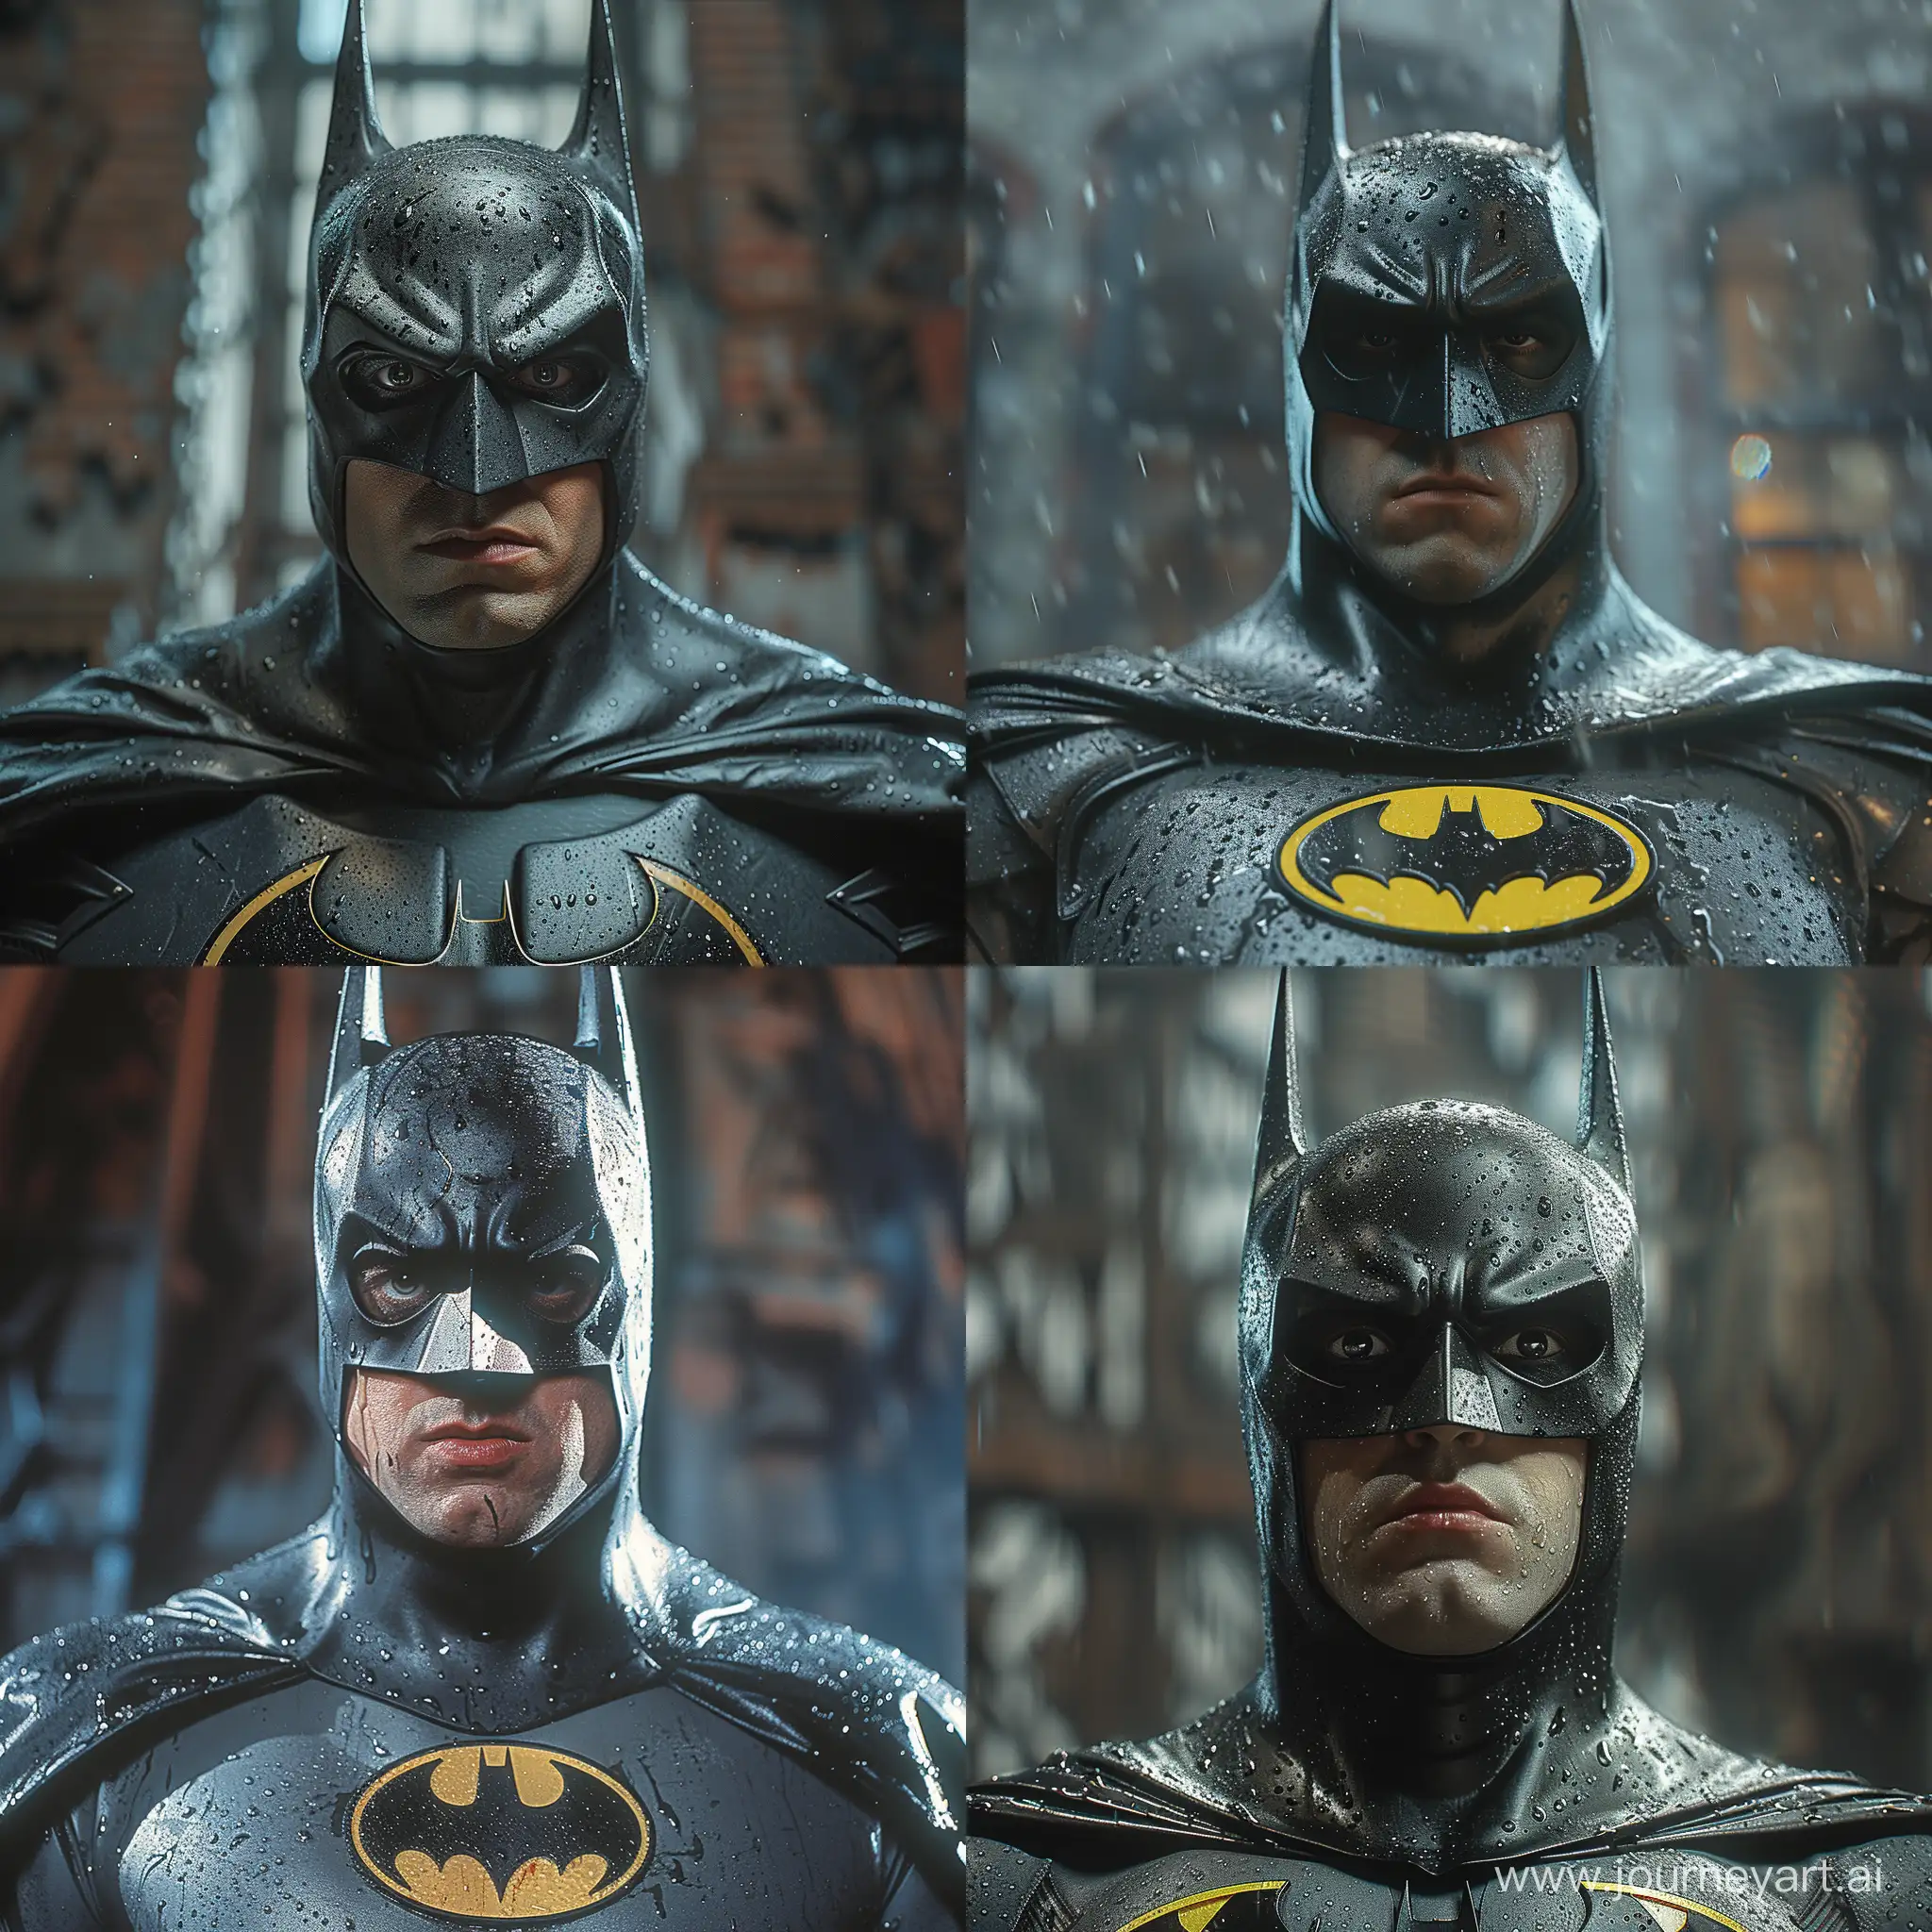 Intense-Batman-1989-Costume-CloseUp-Portrait-in-Dim-Lighting